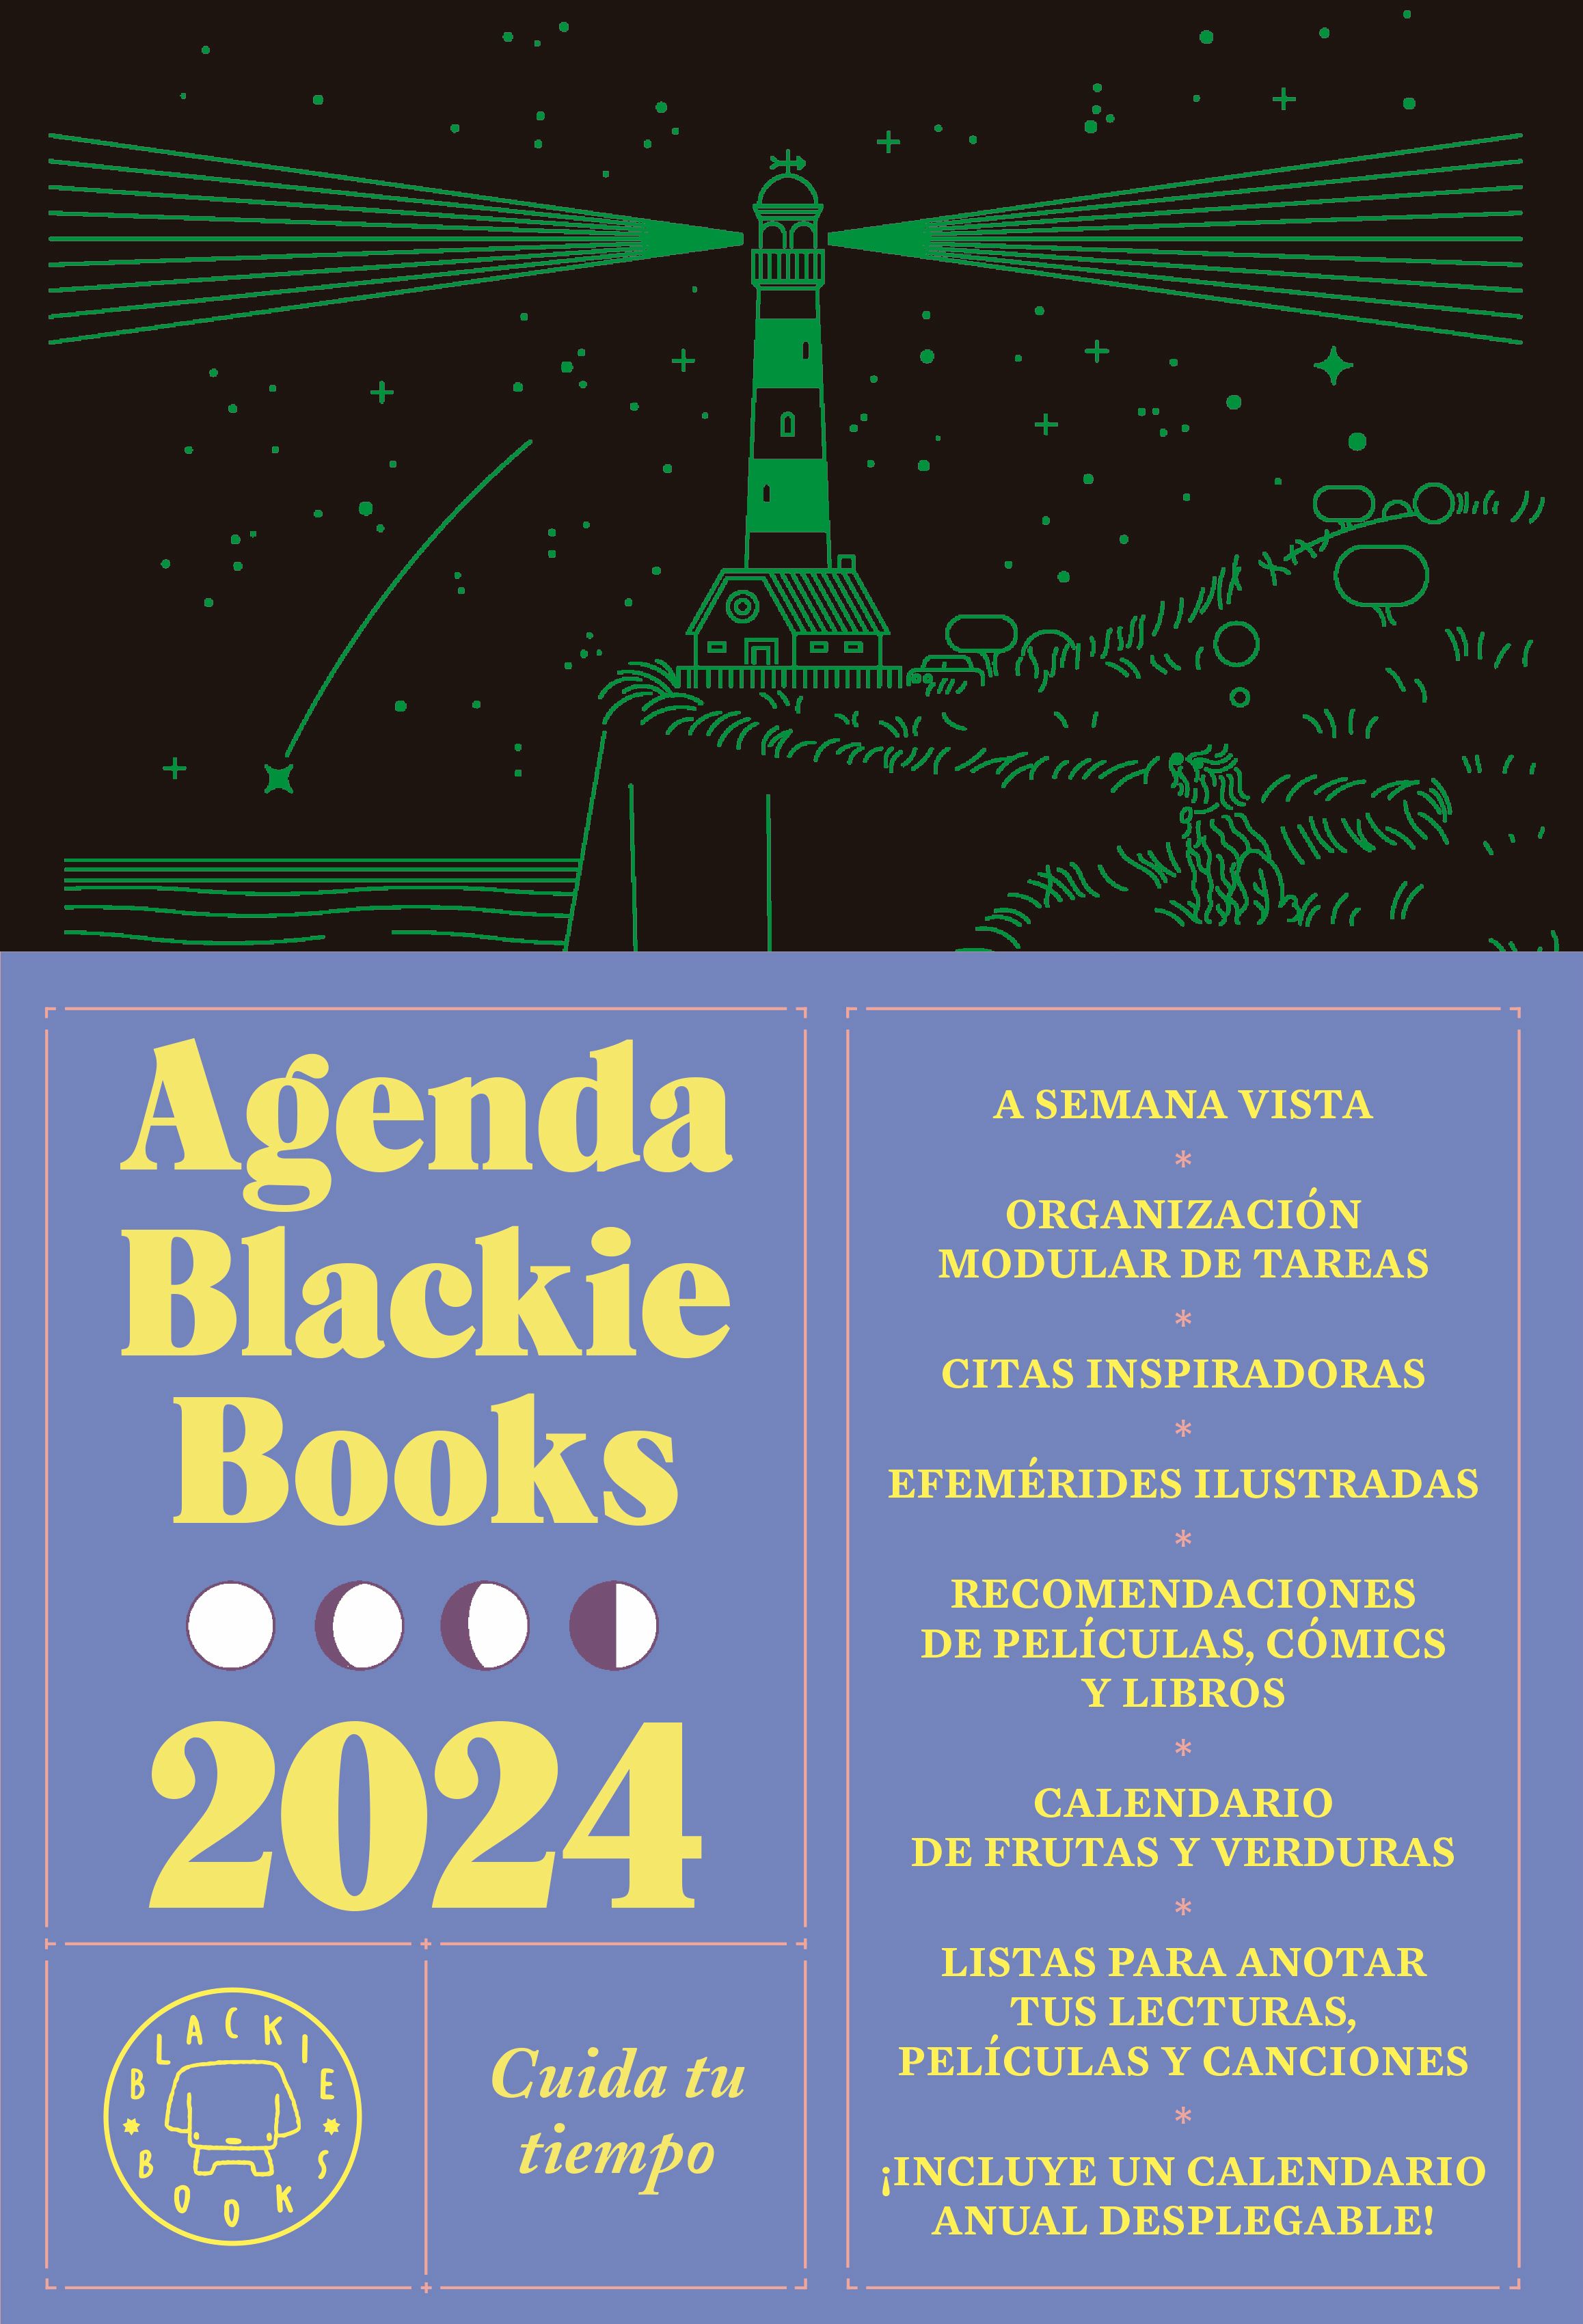 AGENDA BLACKIE BOOKS 2024. CUIDA TU TIEMPO